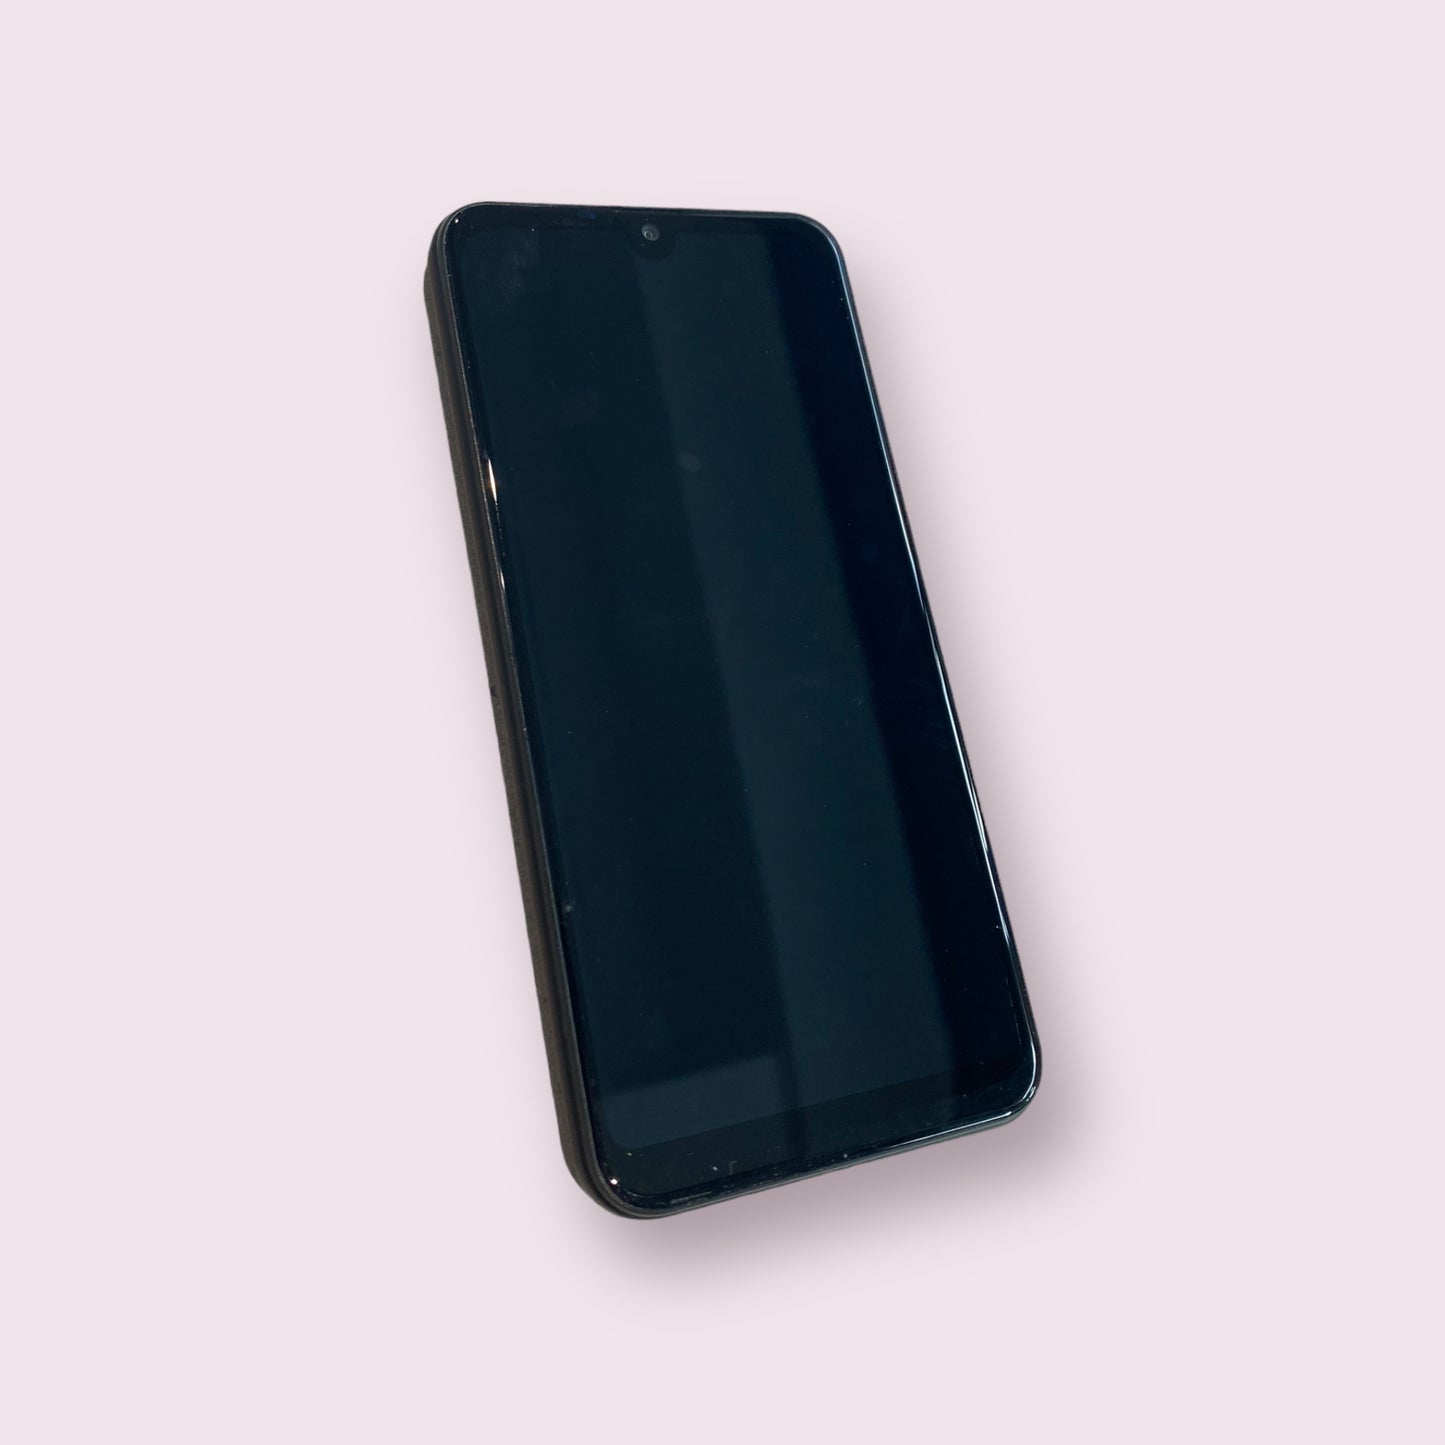 Oukitel C16 Pro 32GB Black Android Smartphone - Unlocked - Grade B